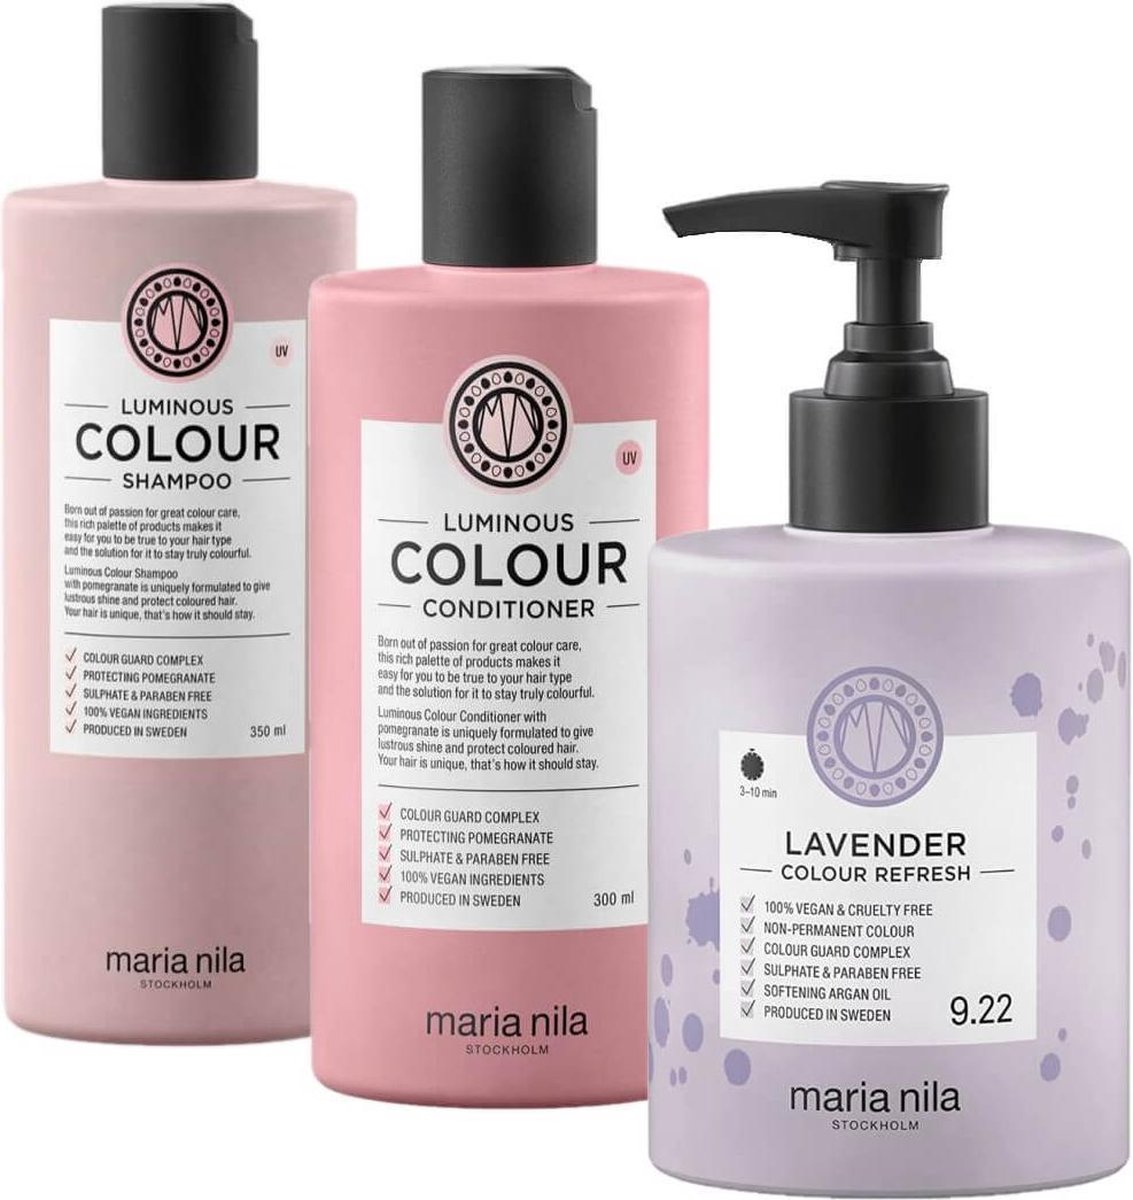 Maria Nila Luminous Colour Refresh Set Lavender | Colour Refresh Bright Lavender 9.22 300 ml + Luminous Colour Shampoo 350 ml + Luminous Colour Conditioner 300 ml